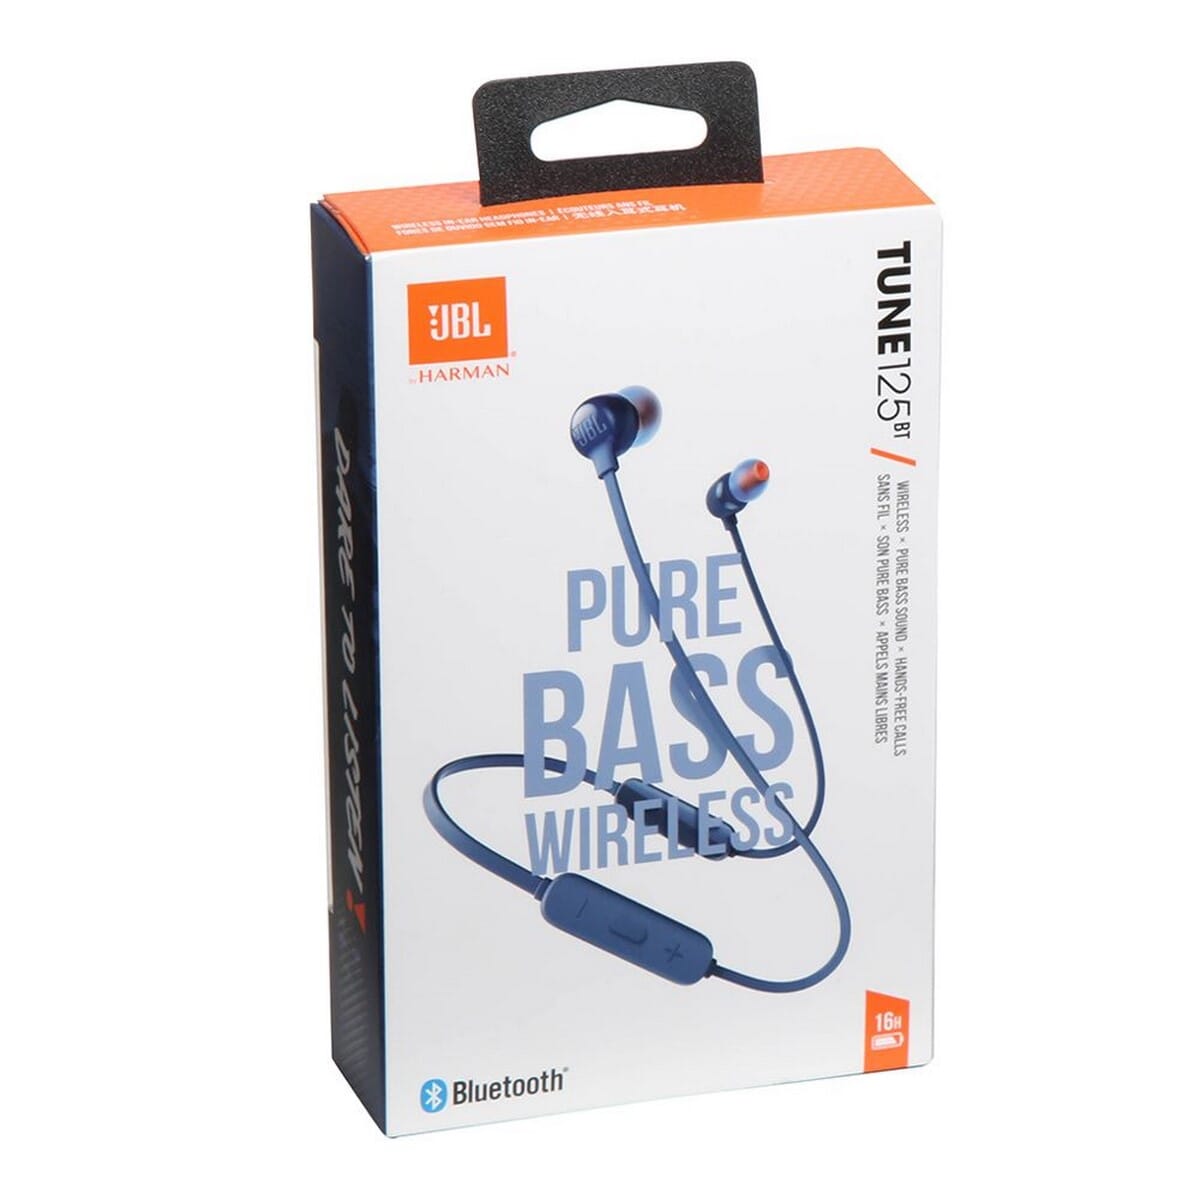 Pure bass wireless